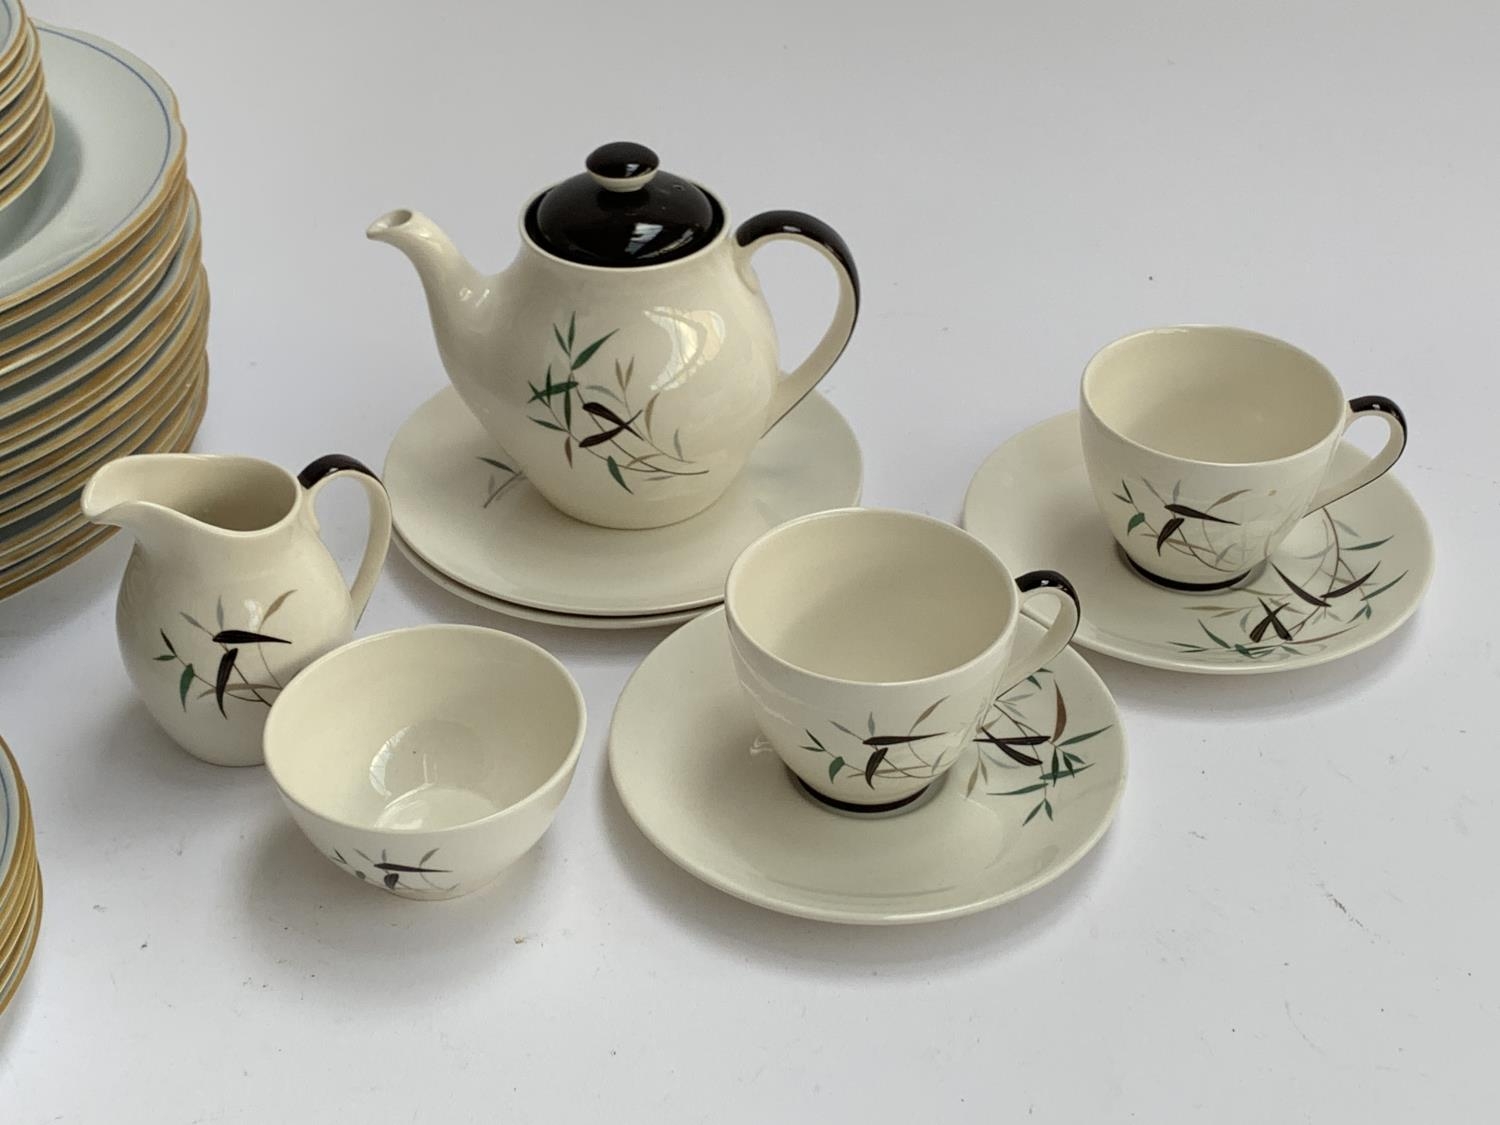 A Royal Doulton 'Bamboo' teaset for two, comprising teapot, milk jug, sugar bowl, side plates (2), - Image 2 of 3